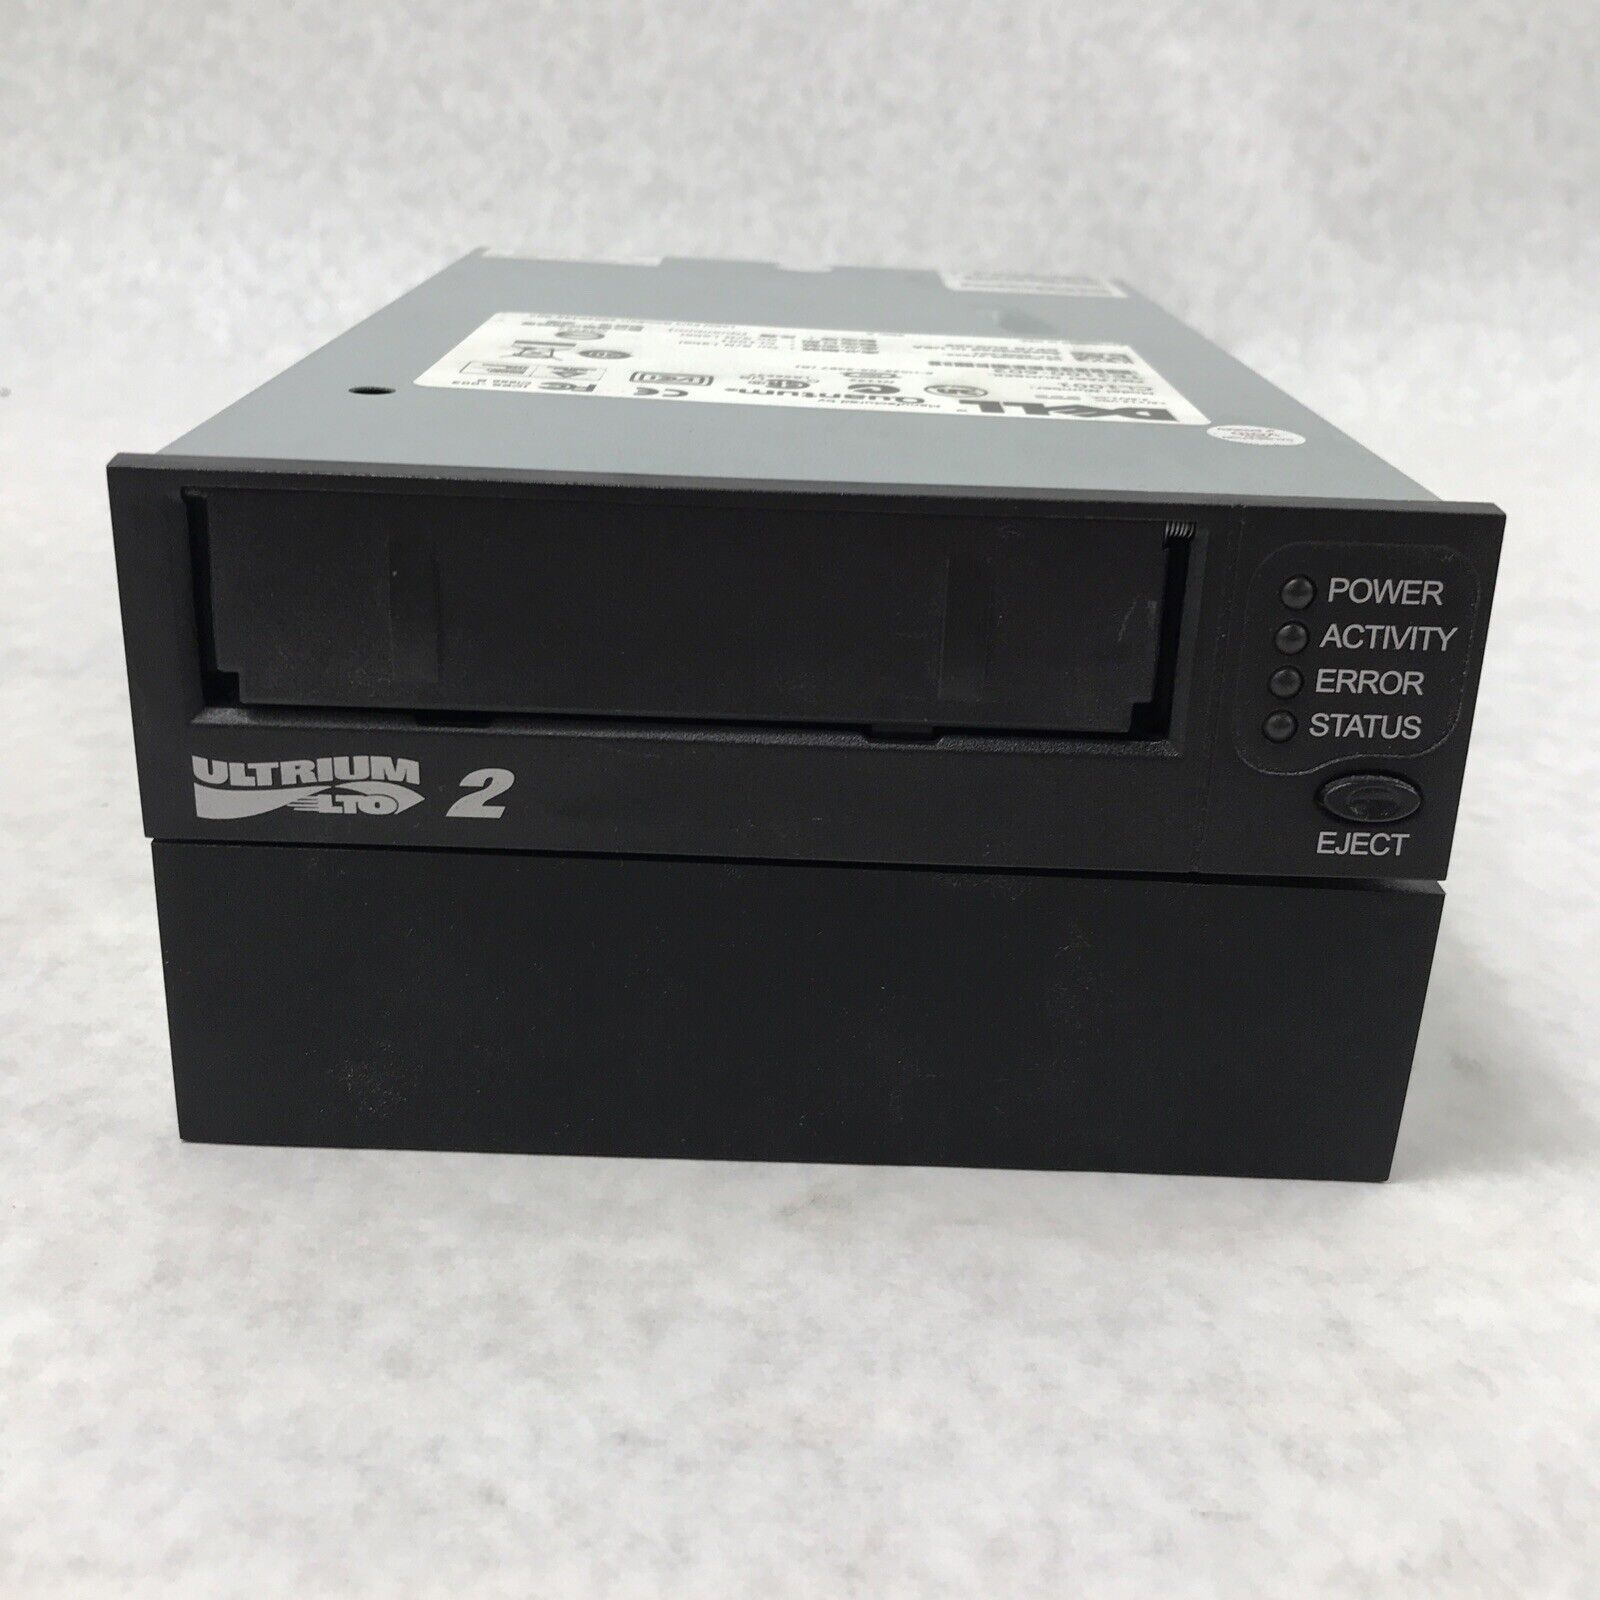 Dell Quantum CL1001 Ultrium LTO-2 200GB SCSI LVD/SE Tape Drive UG209 TE3100-603